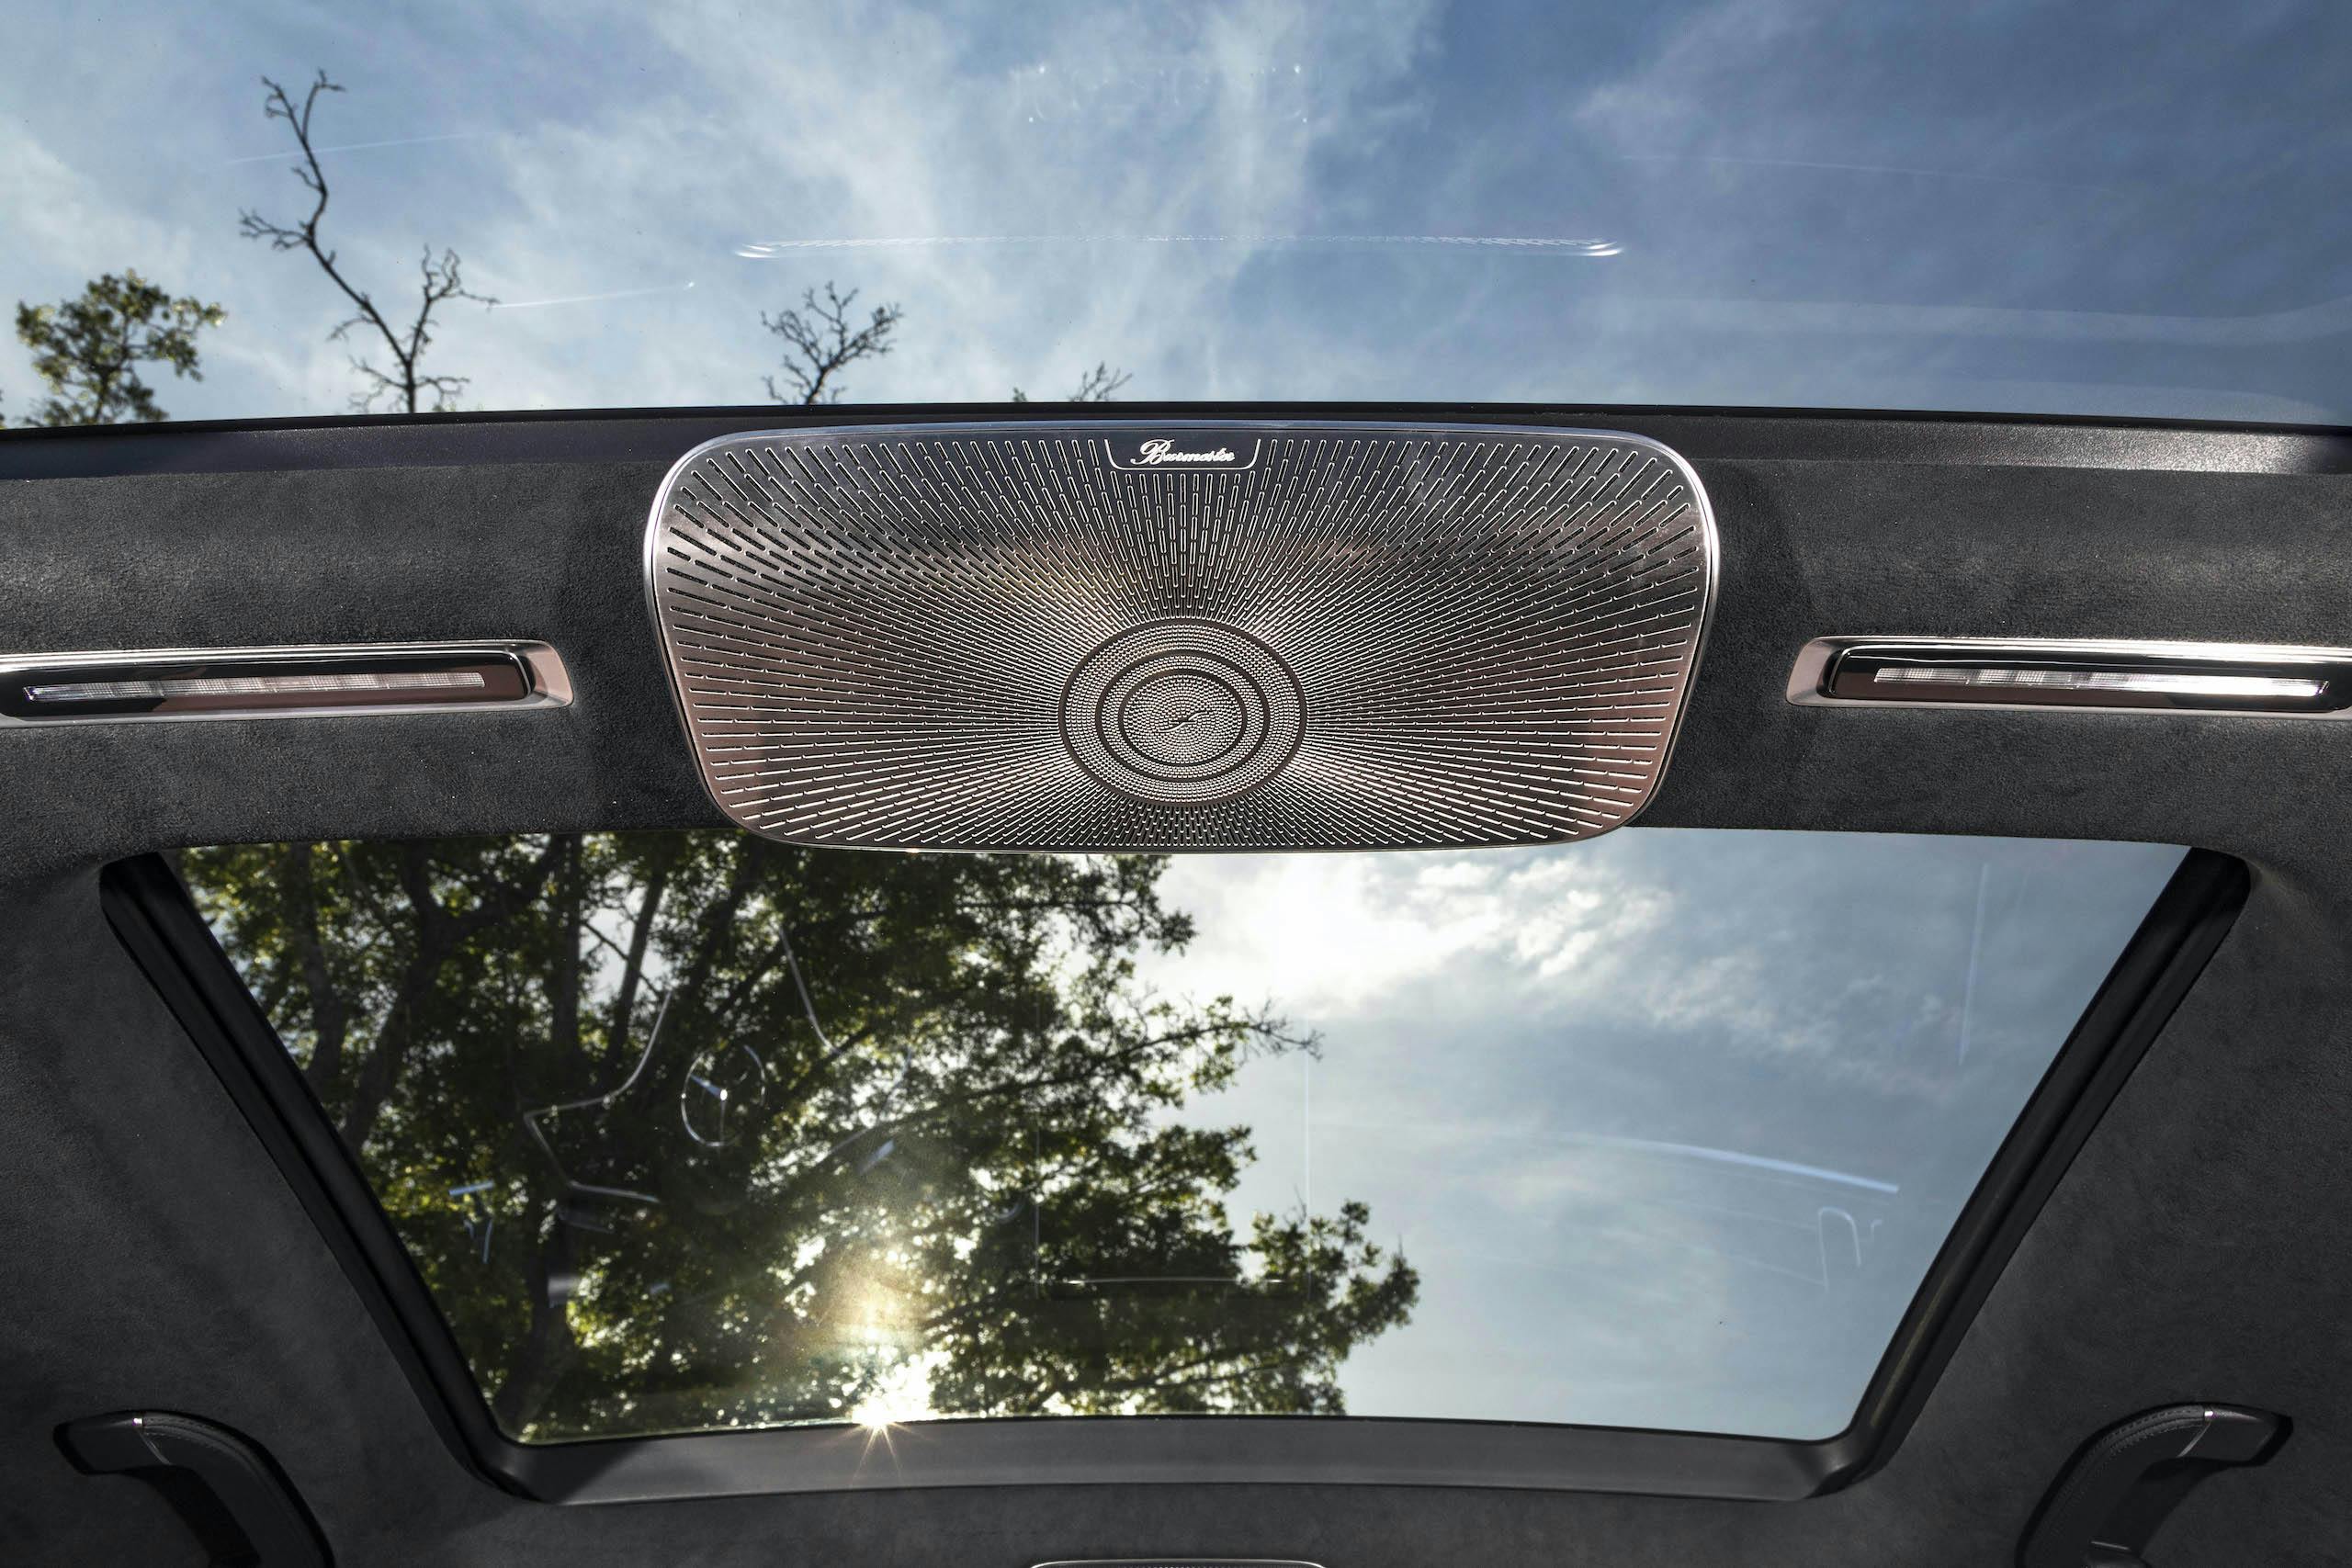 Mercedes Benz-S-Class interior moonroof audio